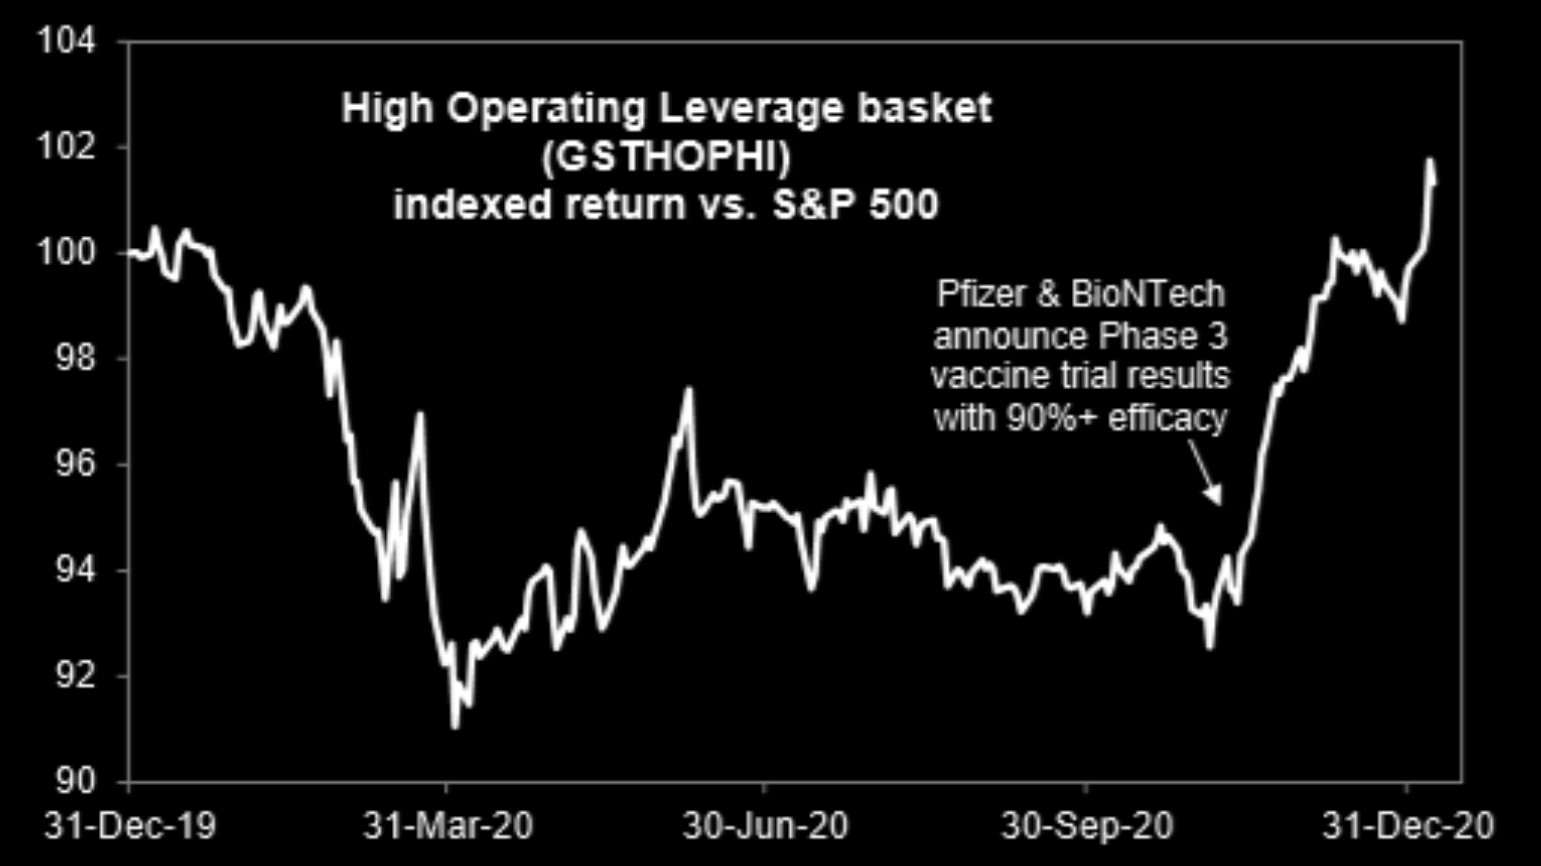 High Operating leverage basket vs. S&P 500